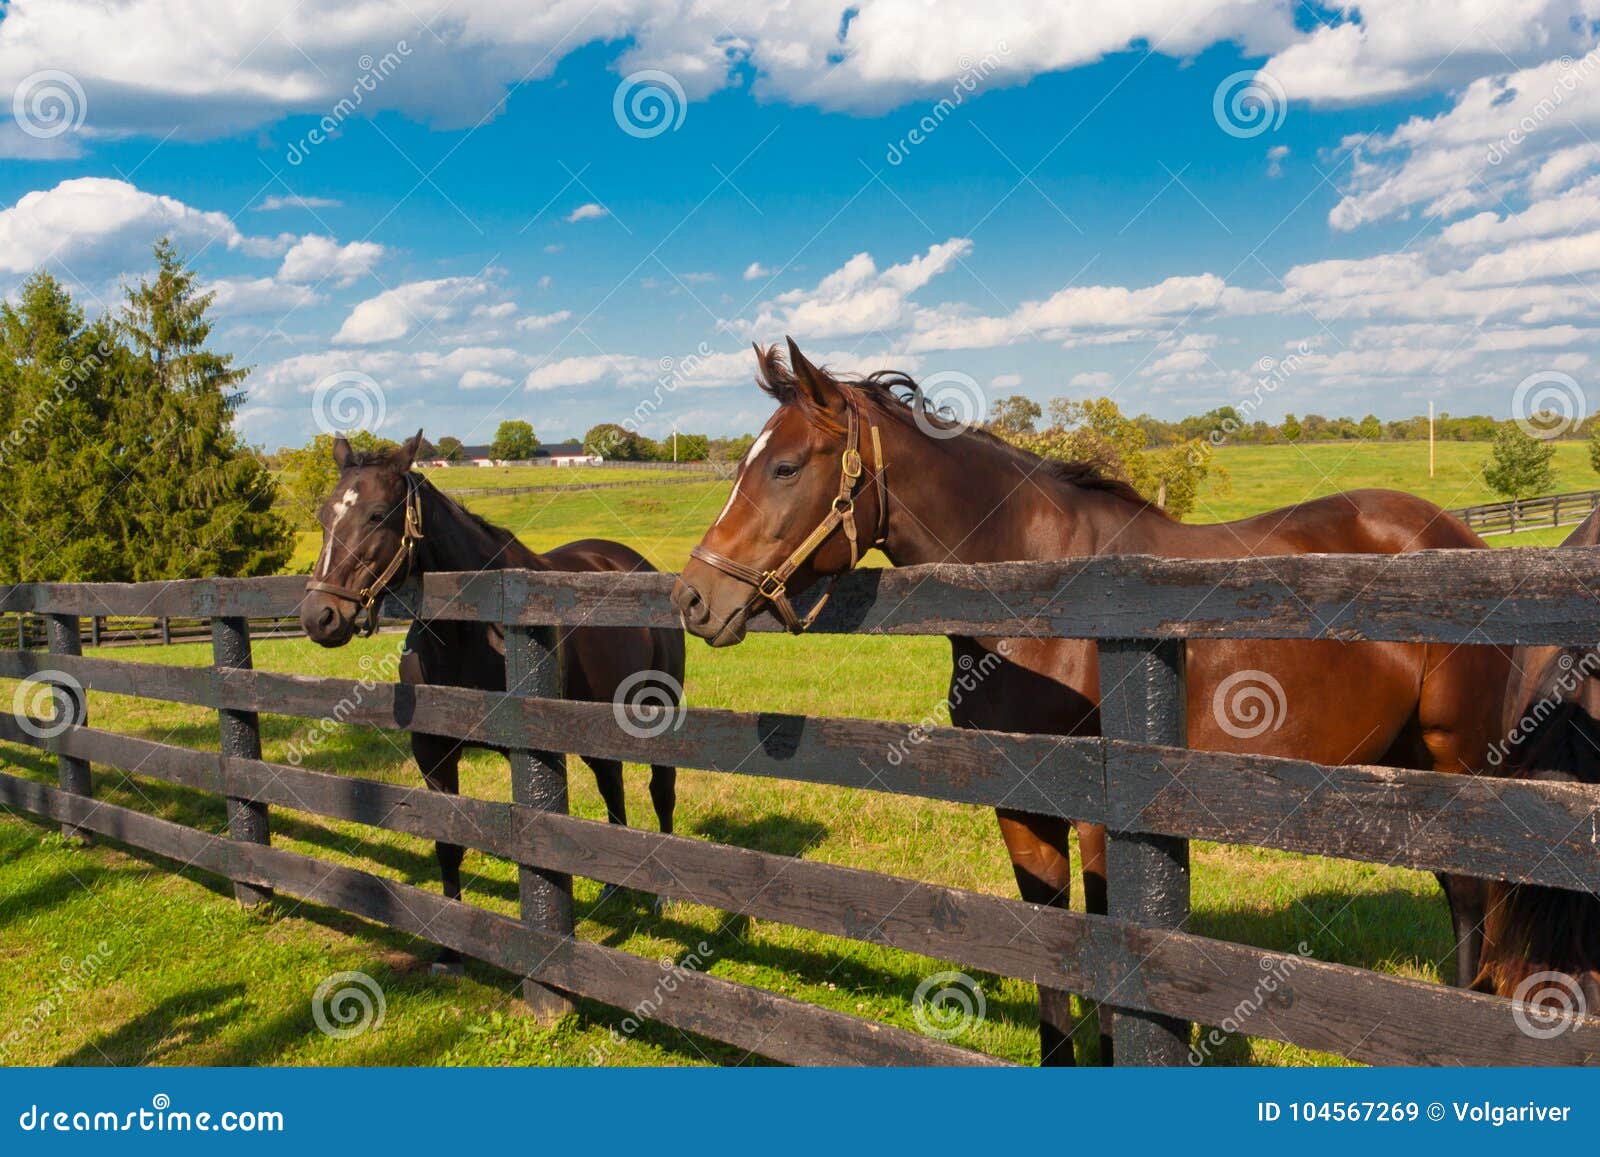 horses at horse farm